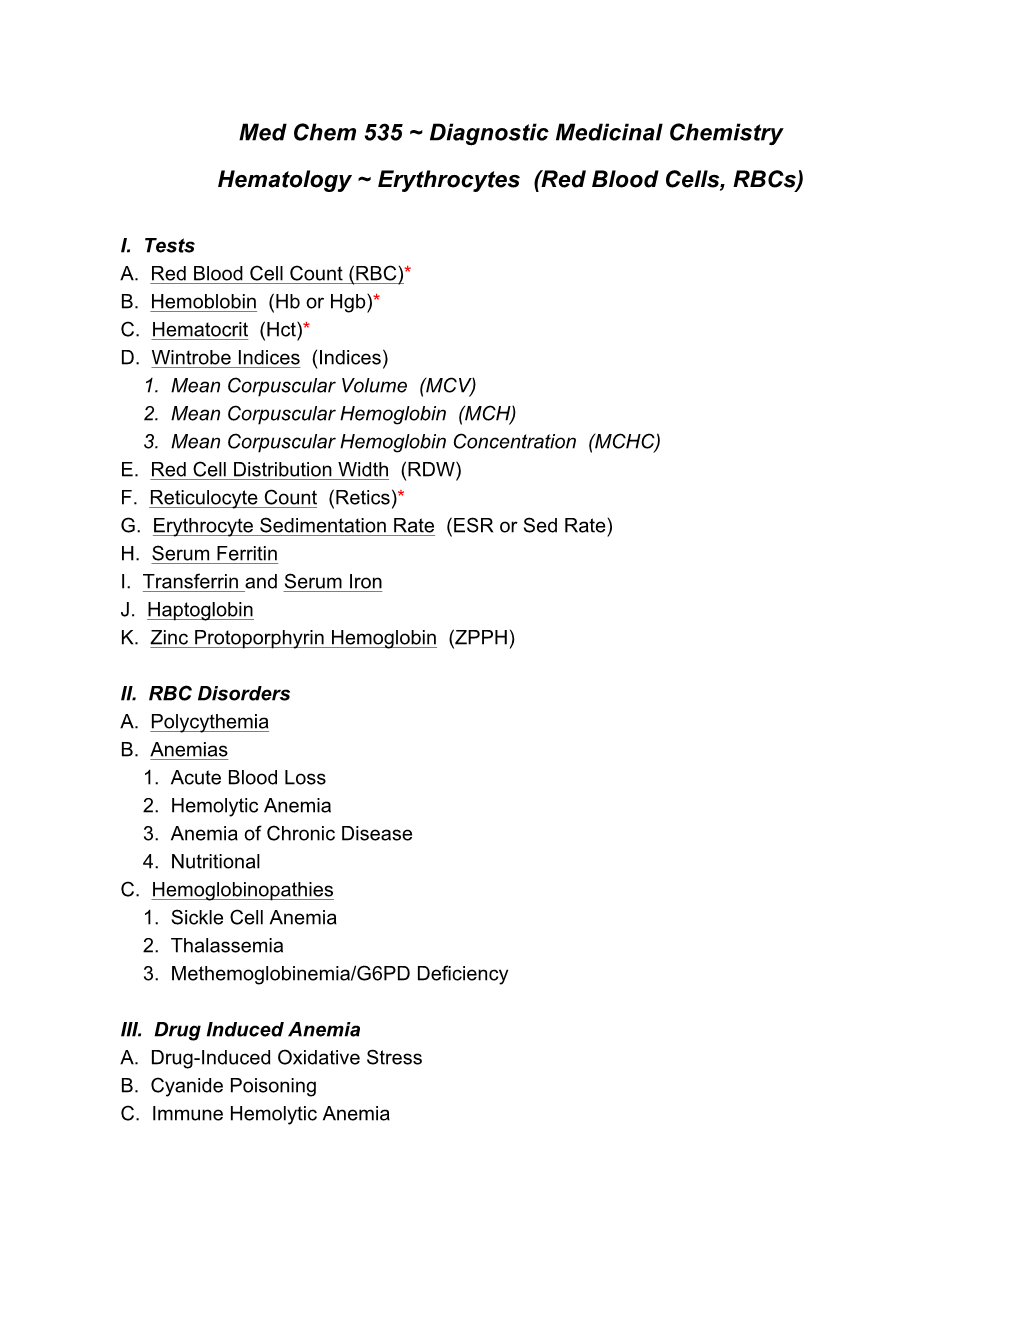 Erythrocytes (Red Blood Cells, Rbcs)